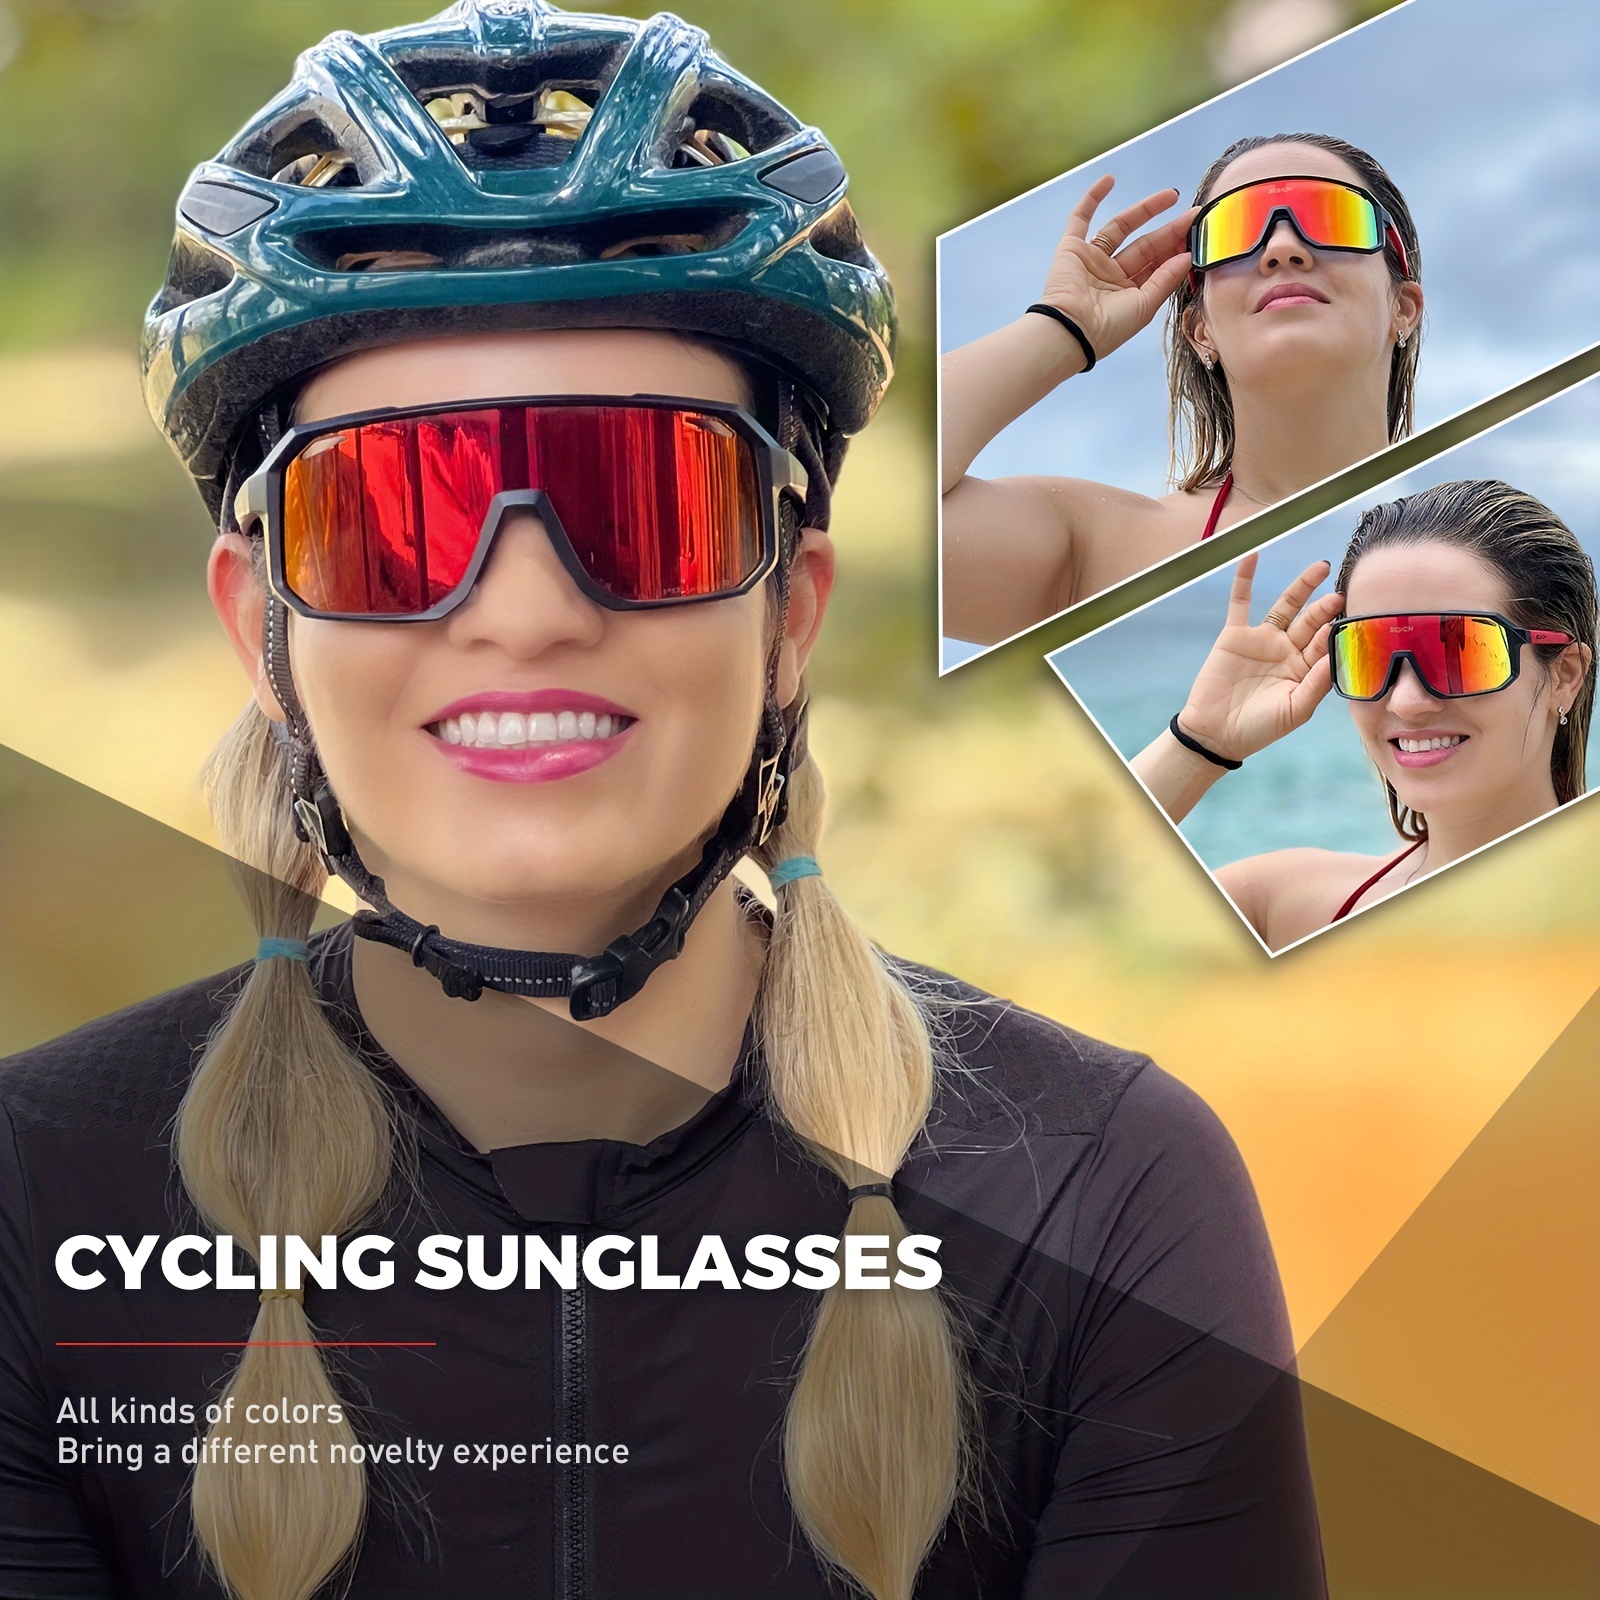 Scvcn Gafas Sol Ciclismo Mtb Deportes Aire Libre Bicicleta - Temu Spain